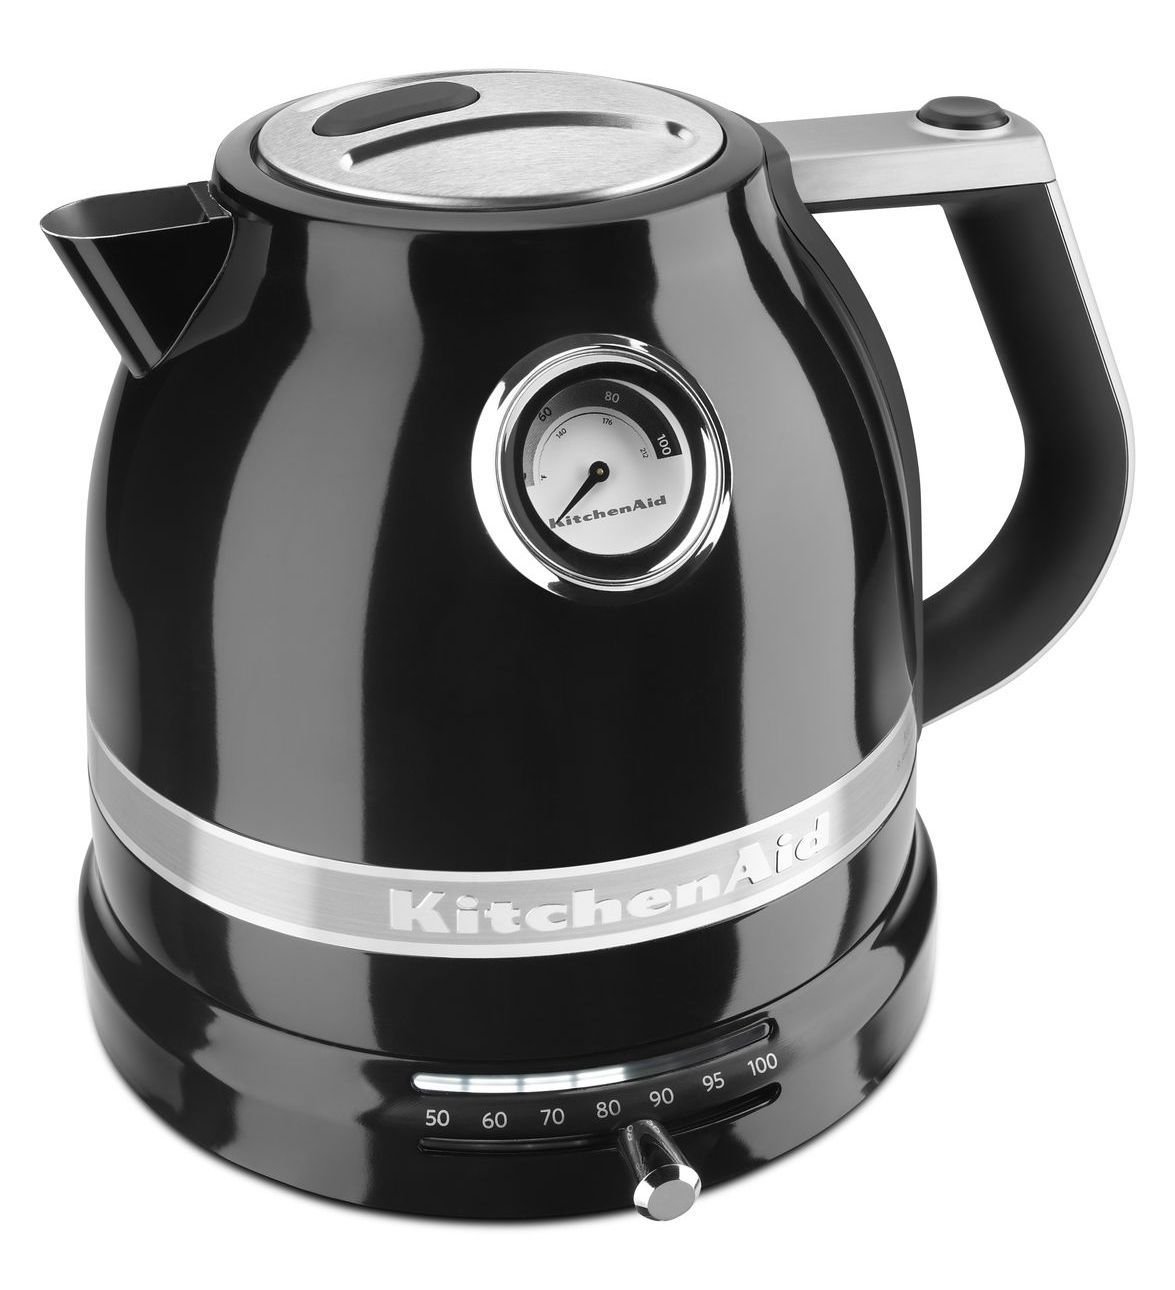 https://cdn.everythingkitchens.com/media/catalog/product/cache/70d878061ea71e5b62358b2b67547186/k/i/kitchenaid-pro-line-electric-water-kettle-onyx-black-item-kek1522ob.jpg